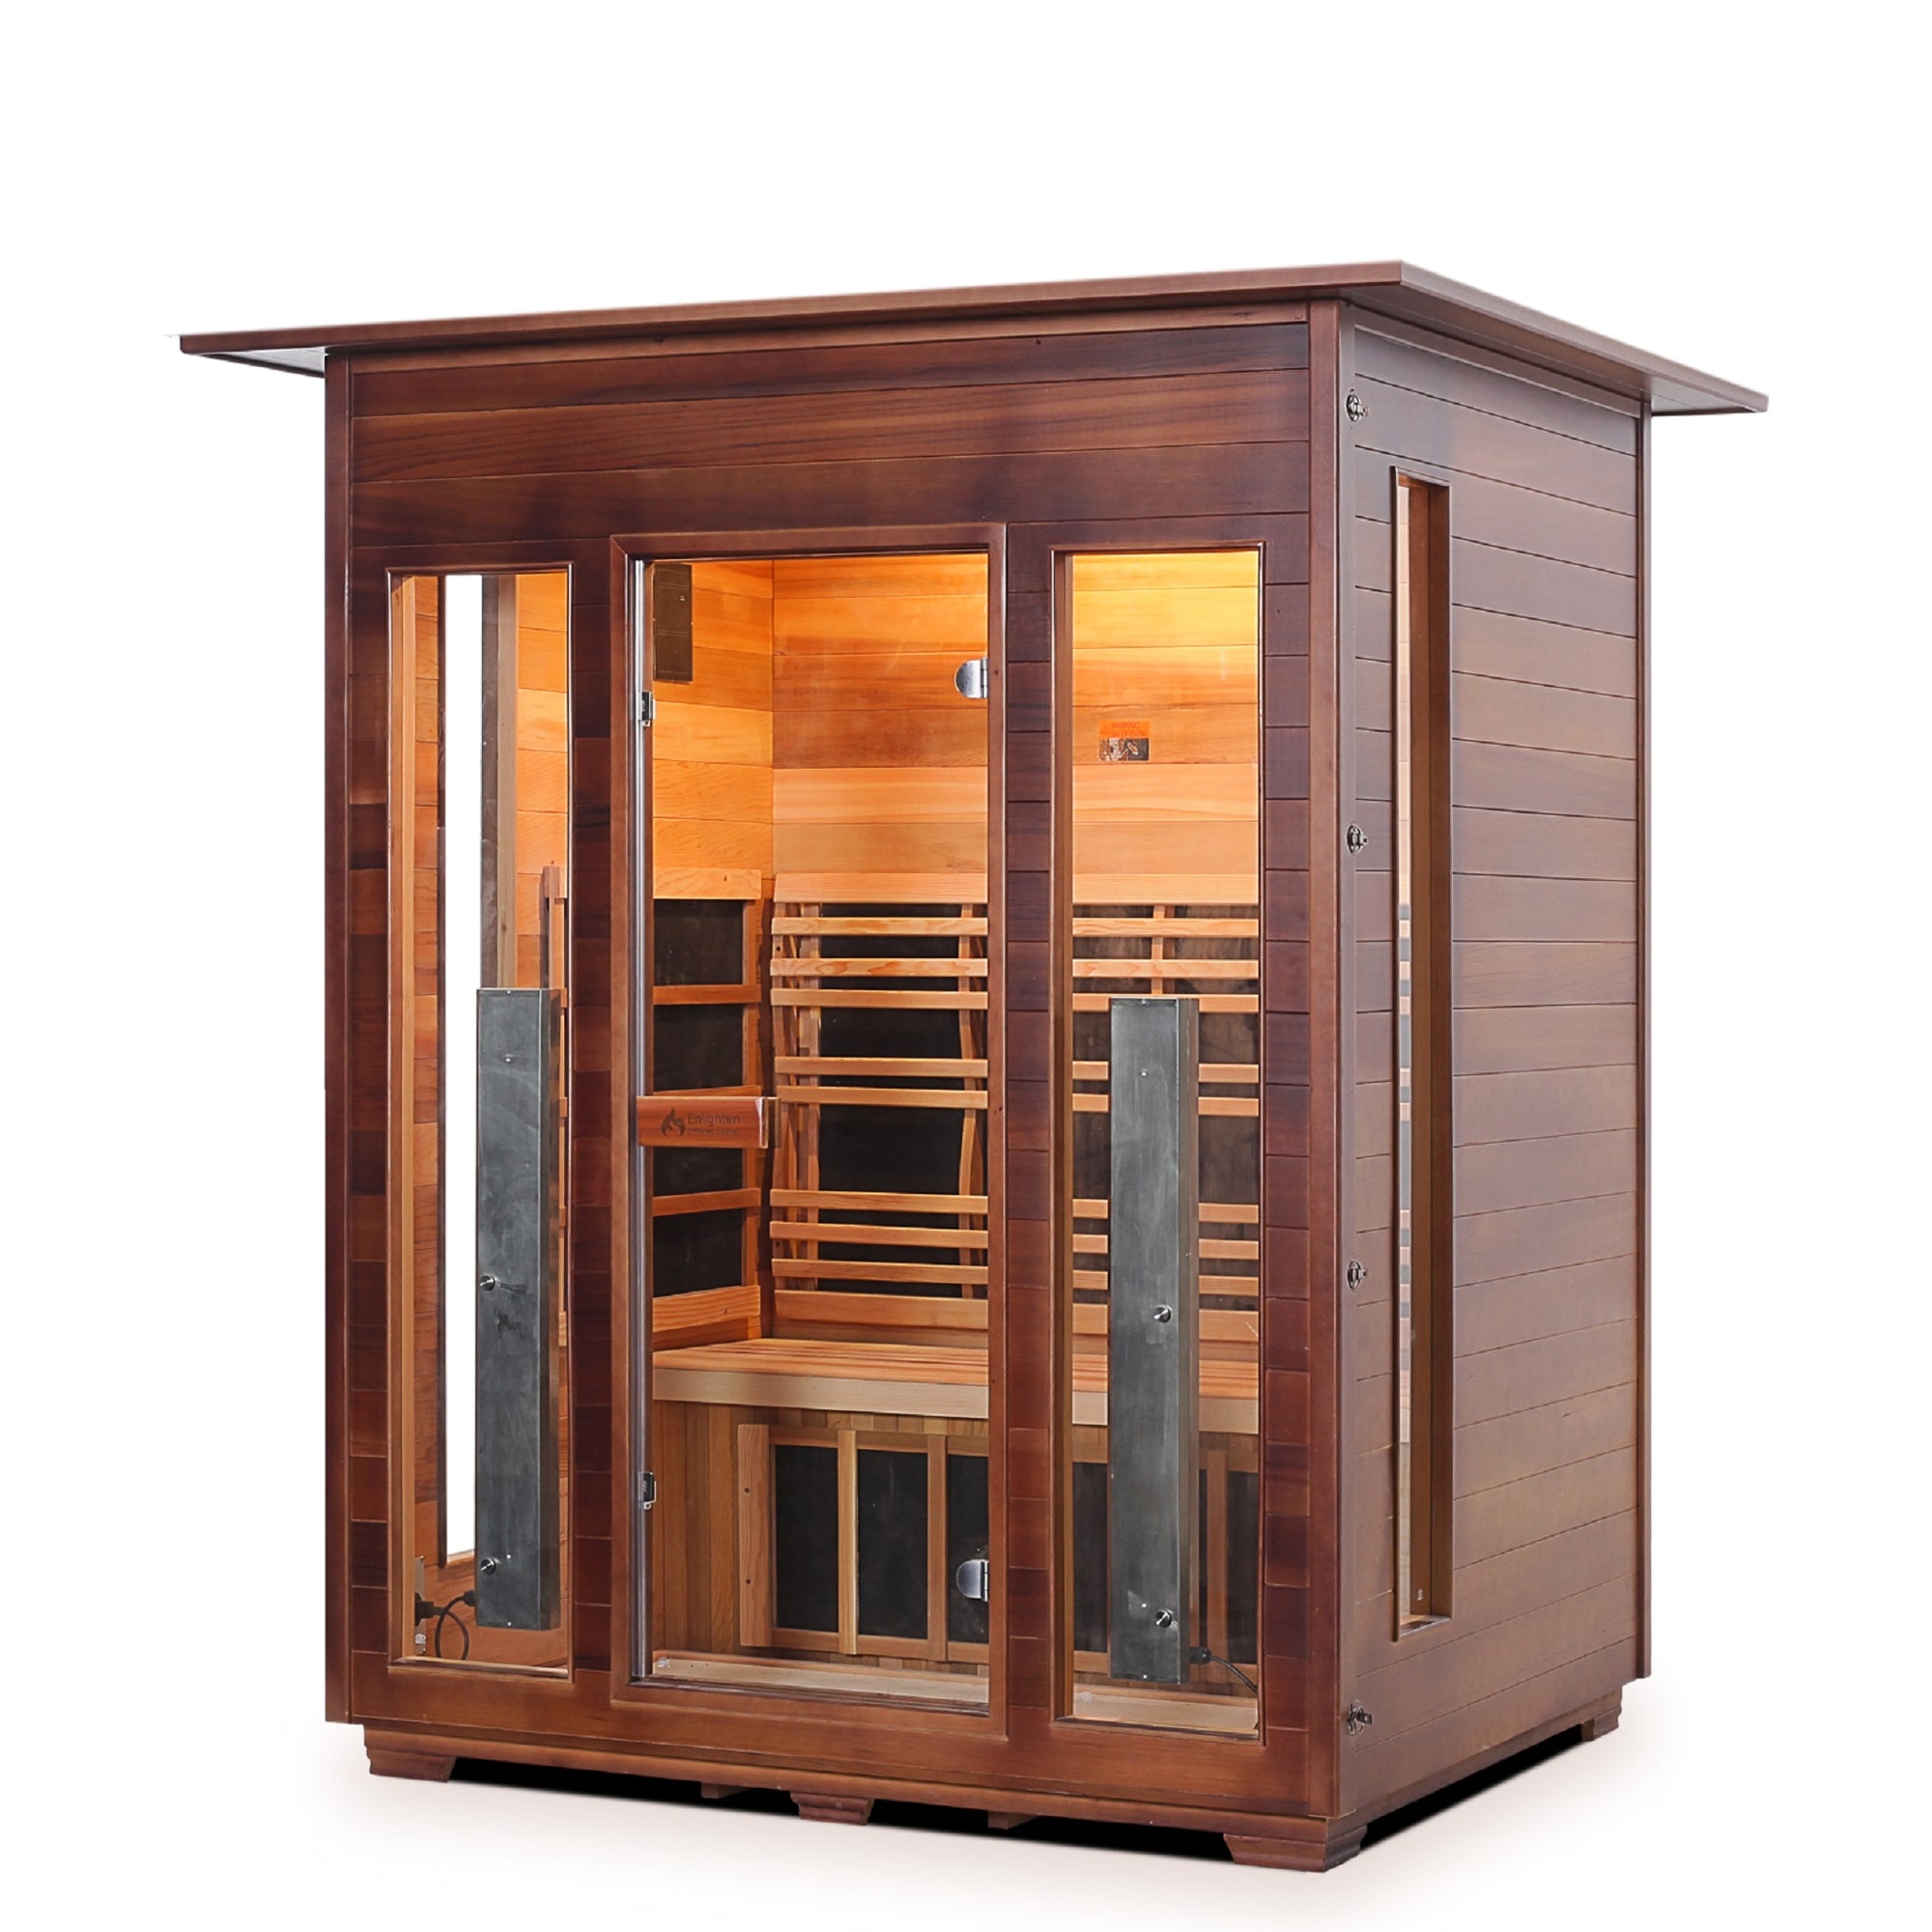 InfraNature Original Rustic Infrared Sauna Canadian Cedarwood  indoor roof with glass door and windows front view